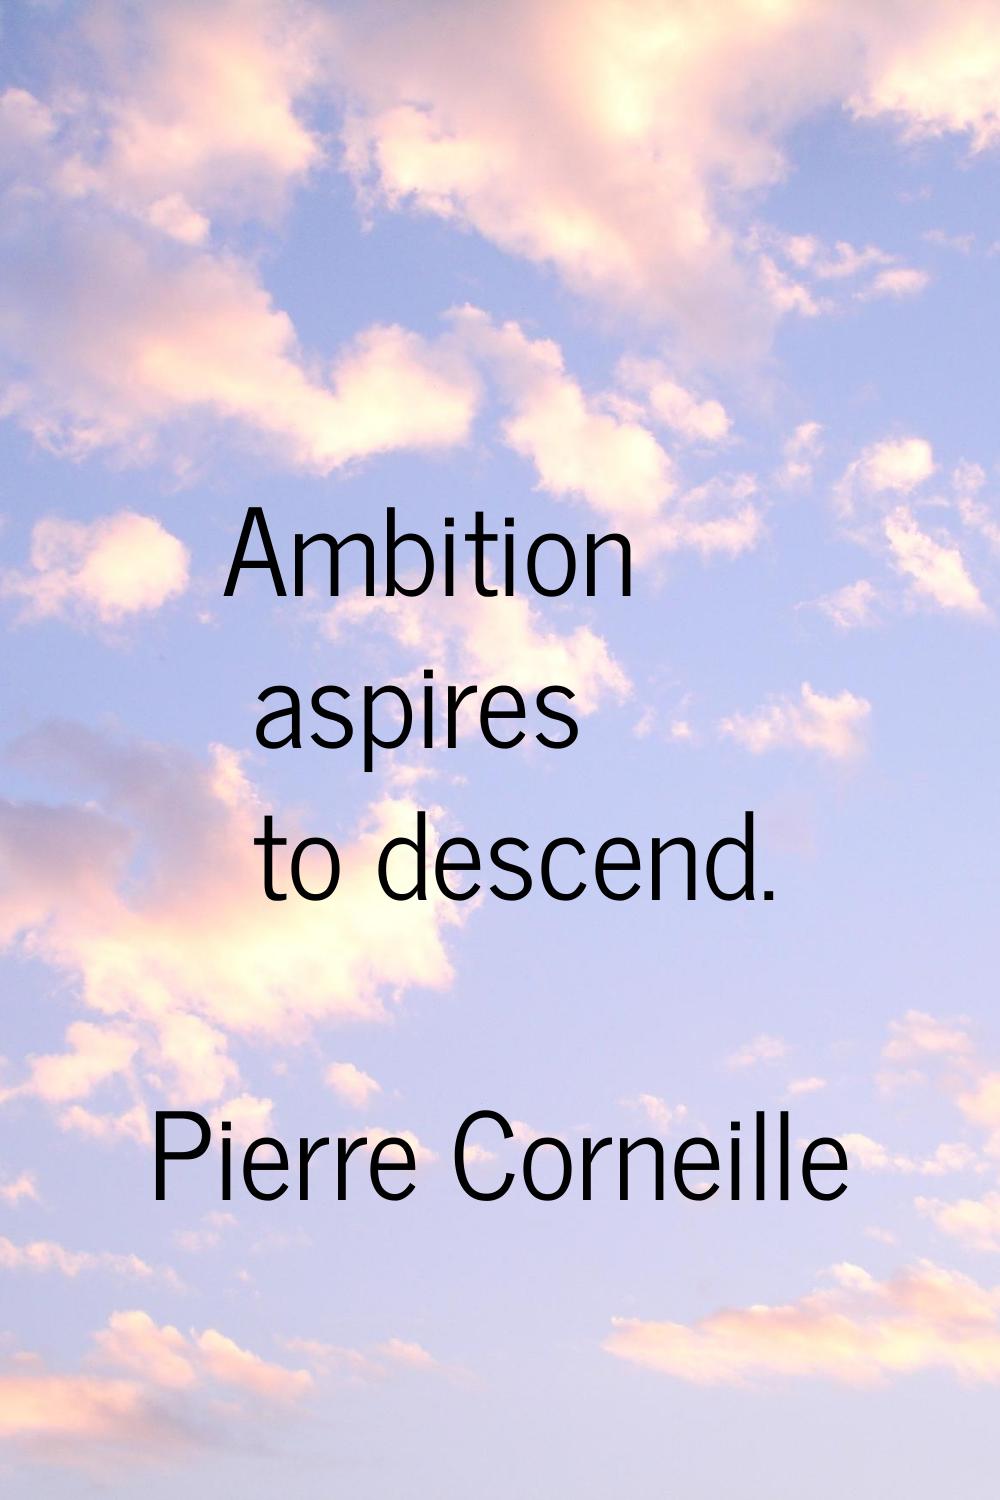 Ambition aspires to descend.